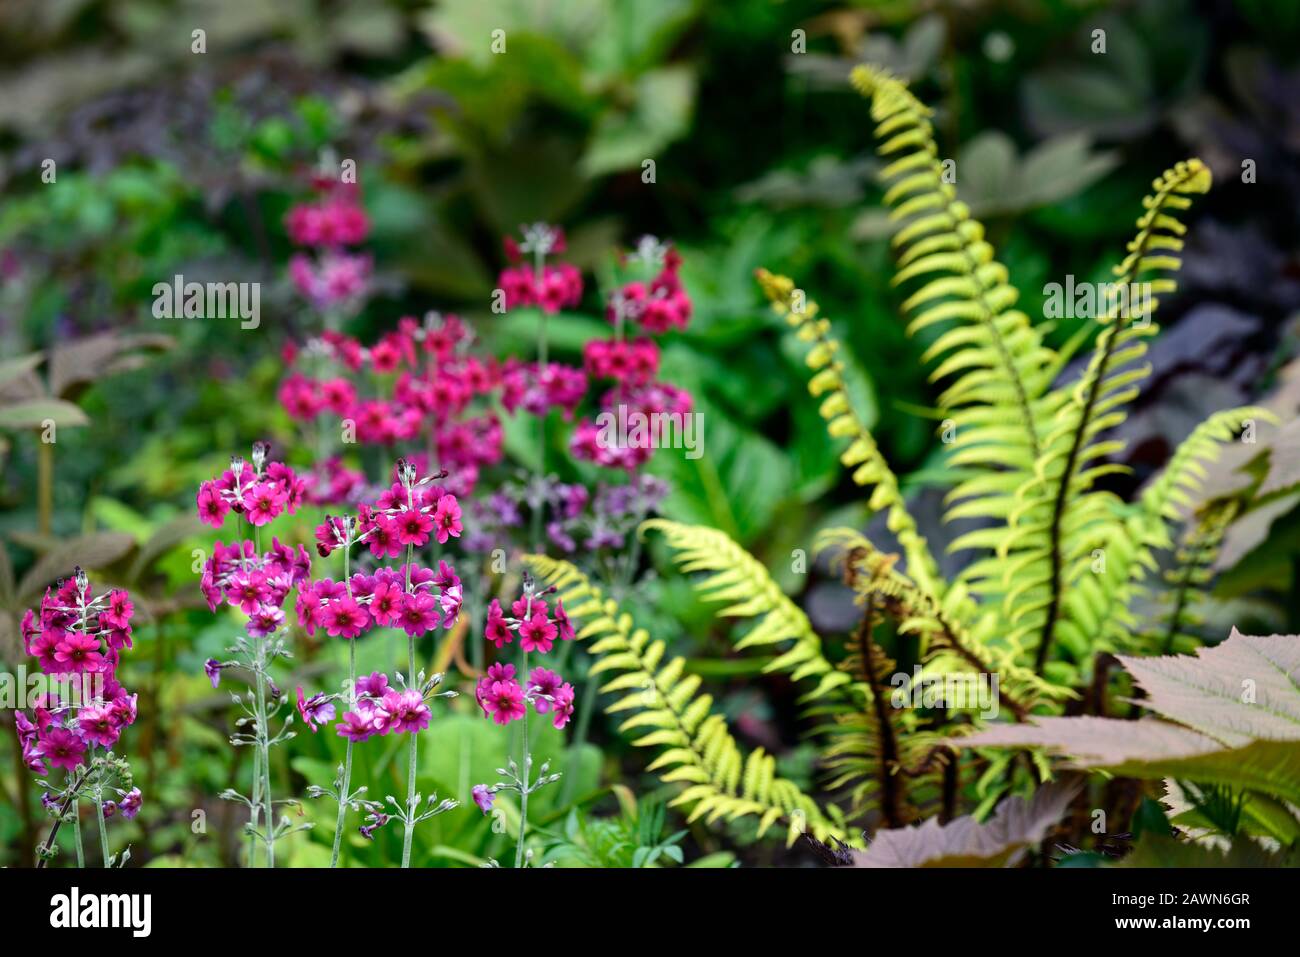 primula miller's crimson,candelabra primula,DRYOPTERIS WALLICHIANA,rodgersia,leaves,foliage,shade,shady,shaded,boggy,moist, damp garden,RM Floral Stock Photo